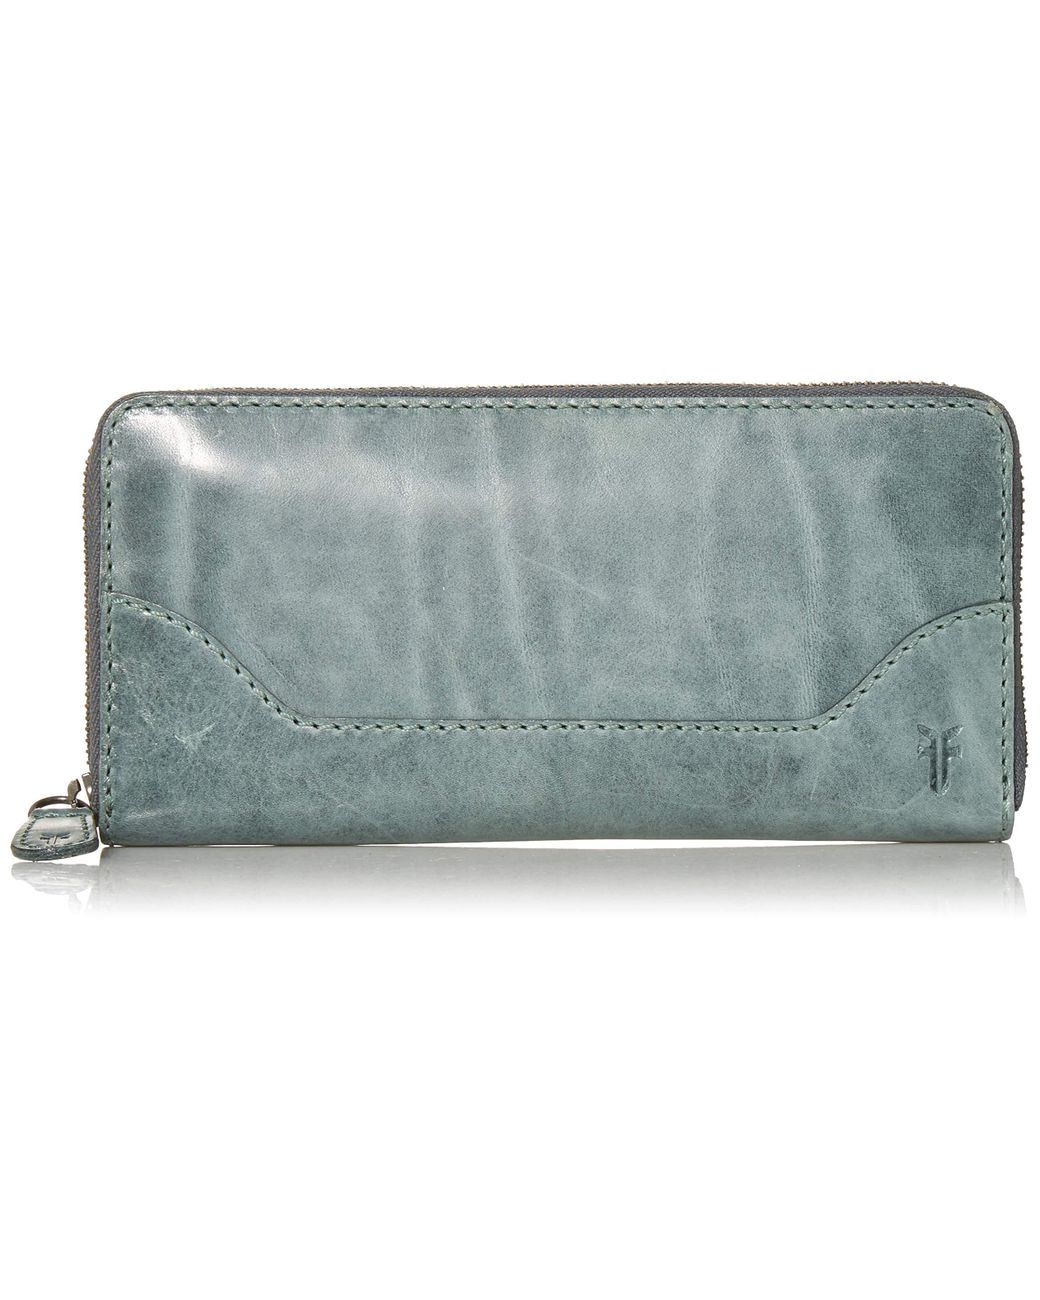 FRYE Melissa Zip Around Leather Wallet 